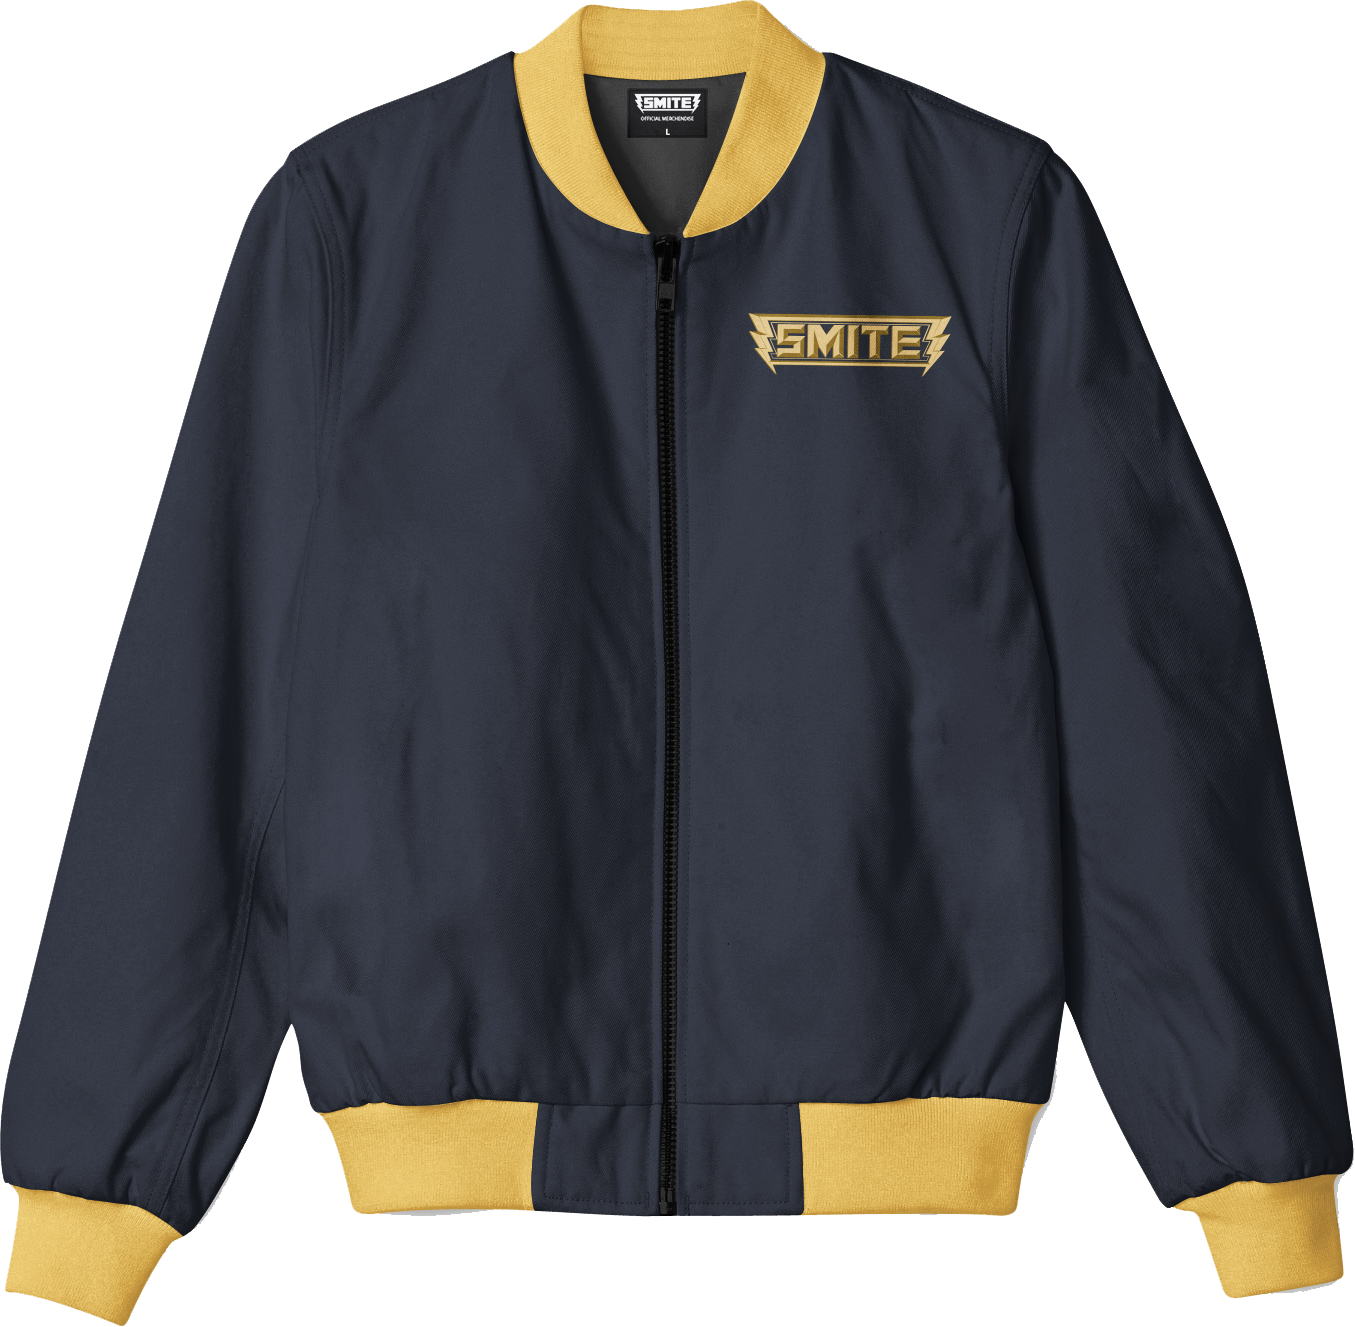 SMITE Bomber jacket